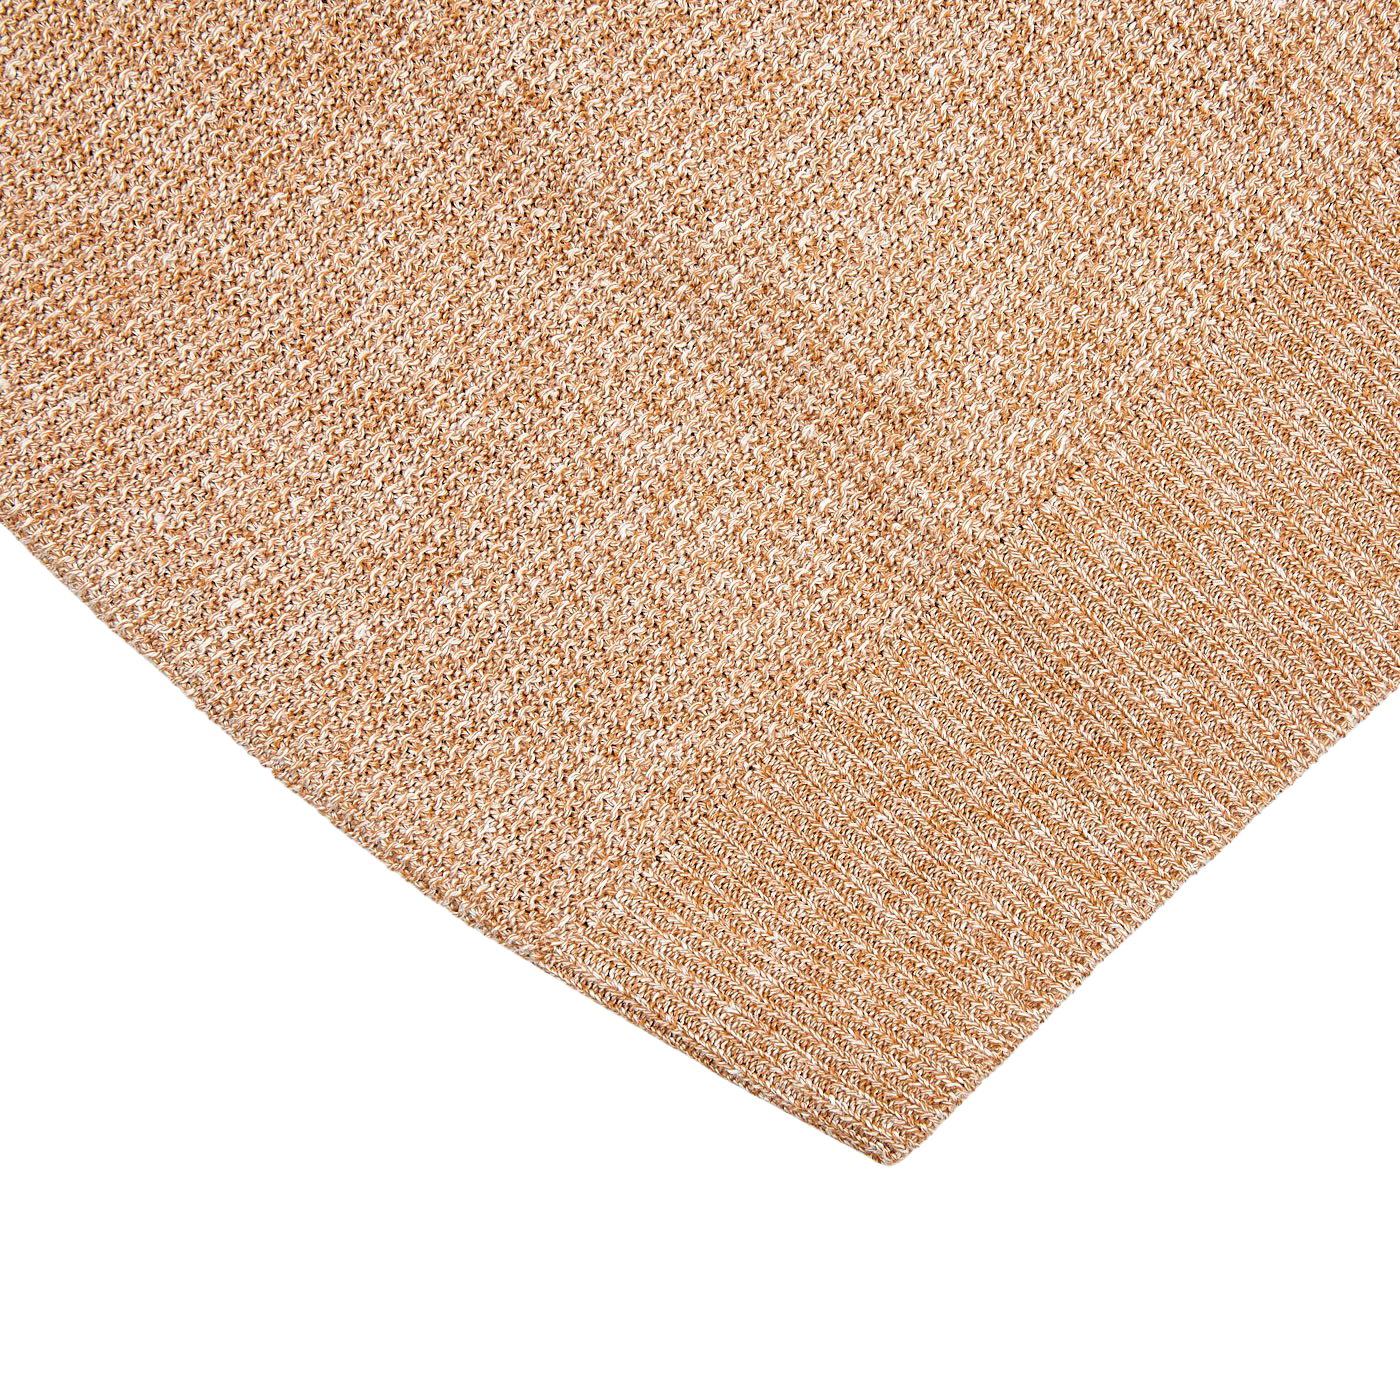 A close up of a Gran Sasso Rust Orange Cotton Linen Polo Shirt.